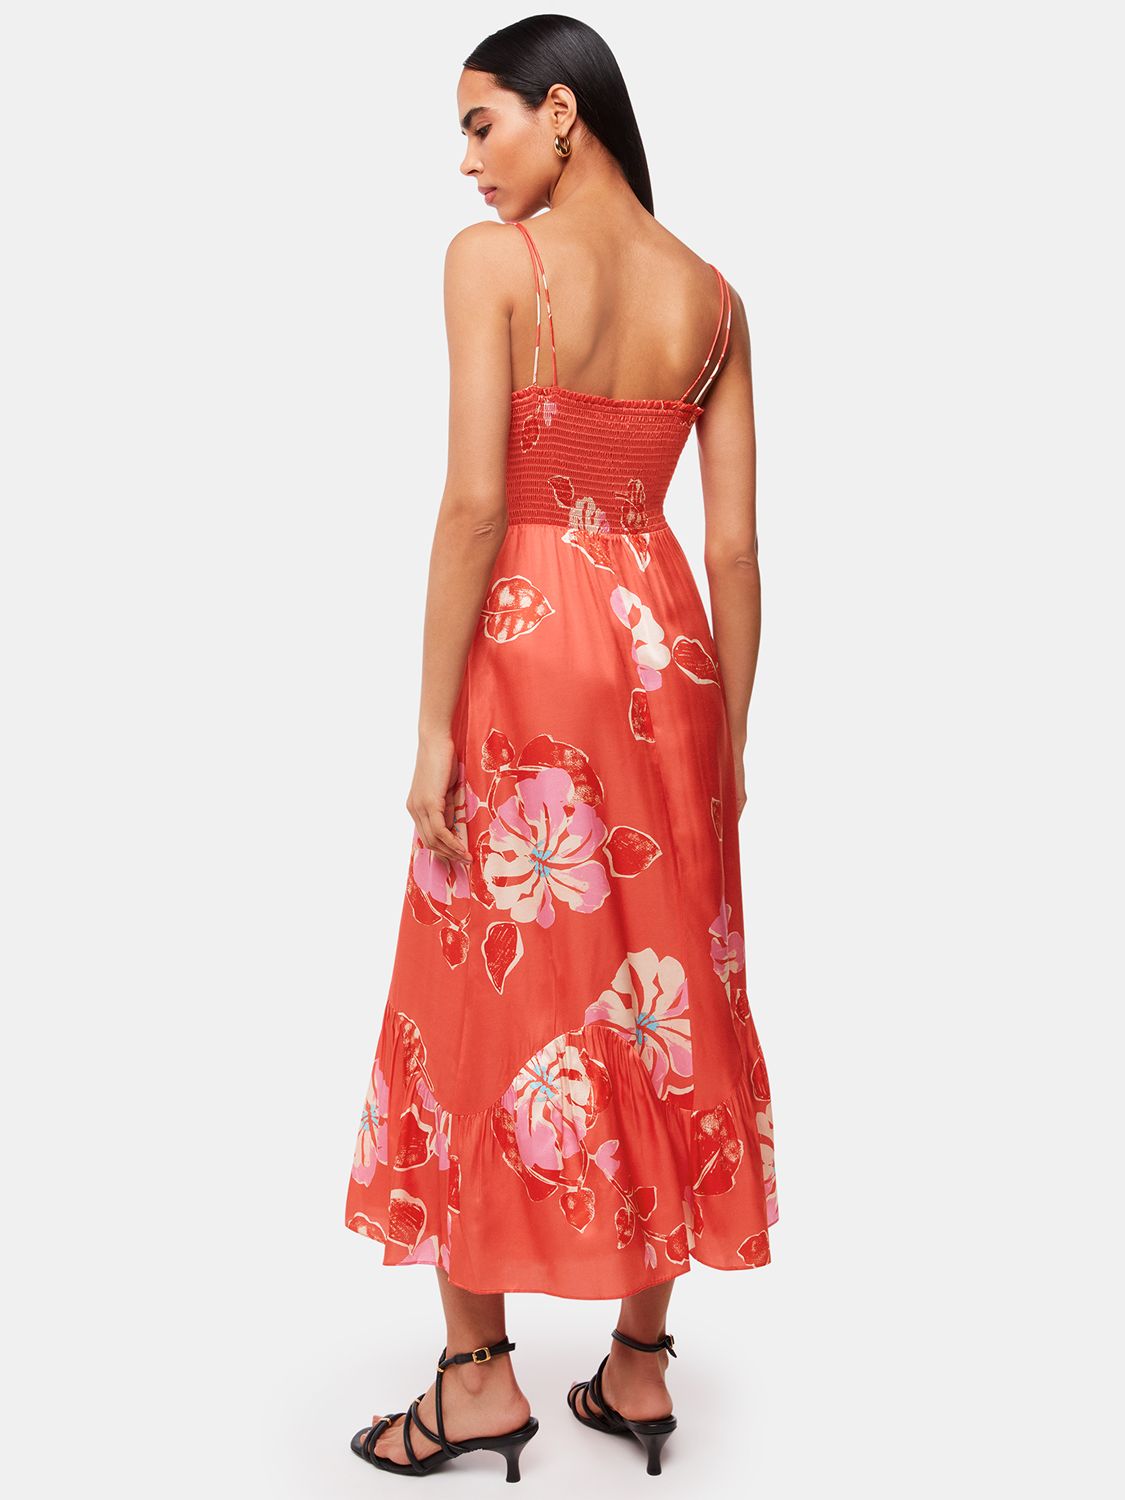 Whistles Raffa Hibiscus Print Maxi Dress, Coral/Multi, 6